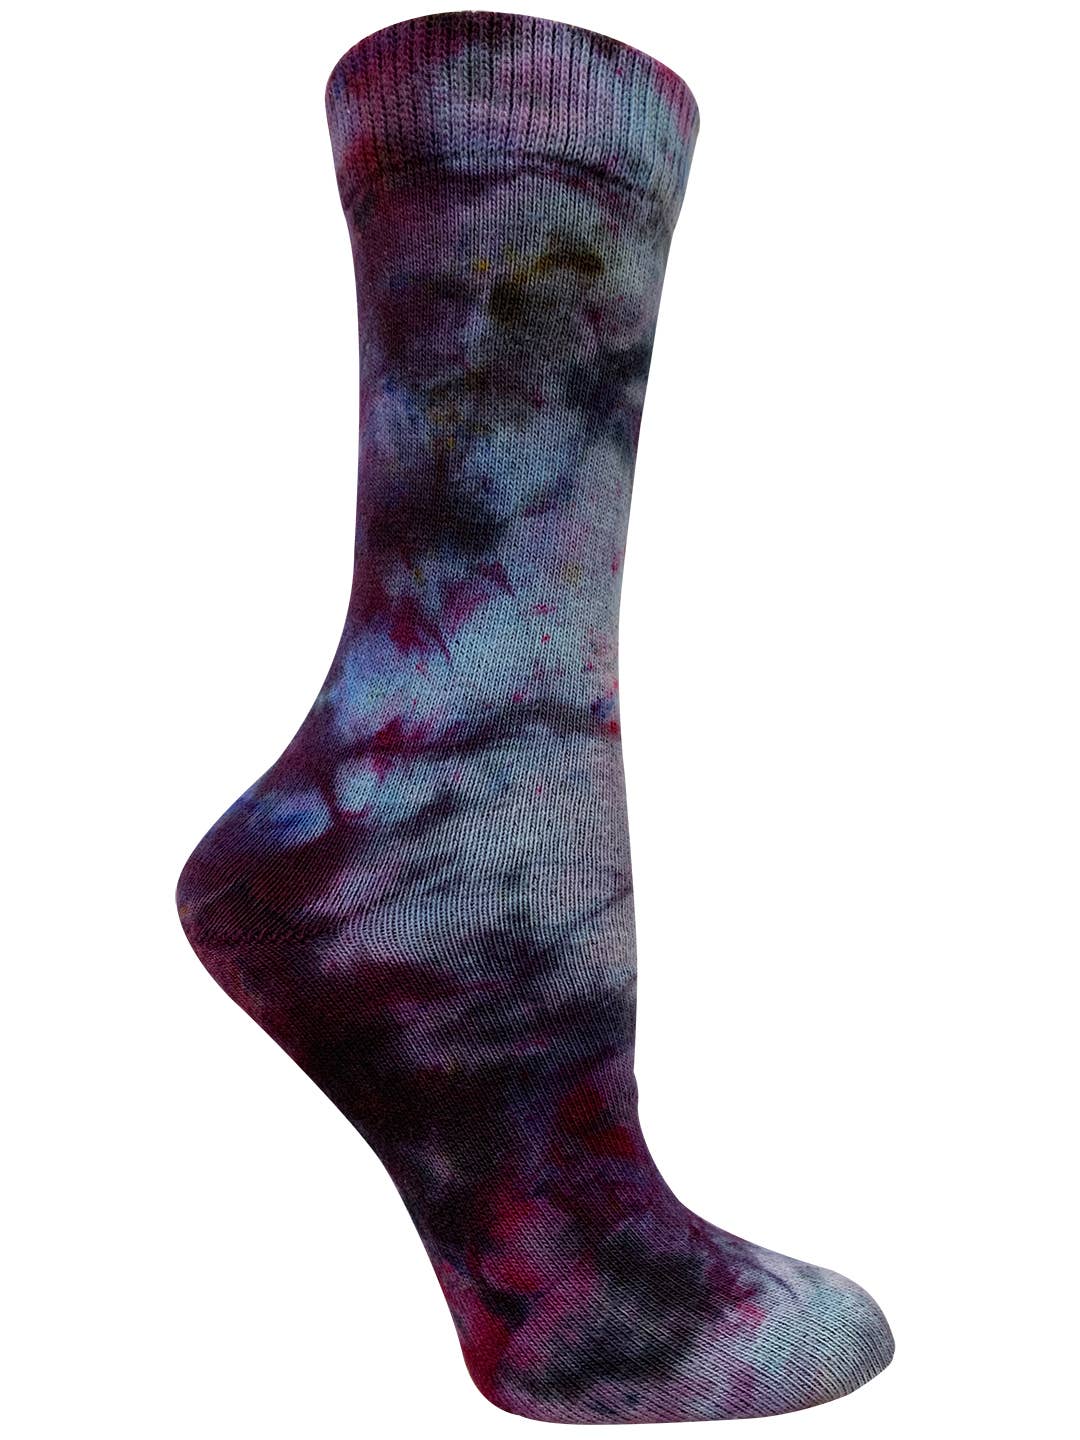 RocknSocks - Organic Cotton Tie Dye Crew Socks - surprise color